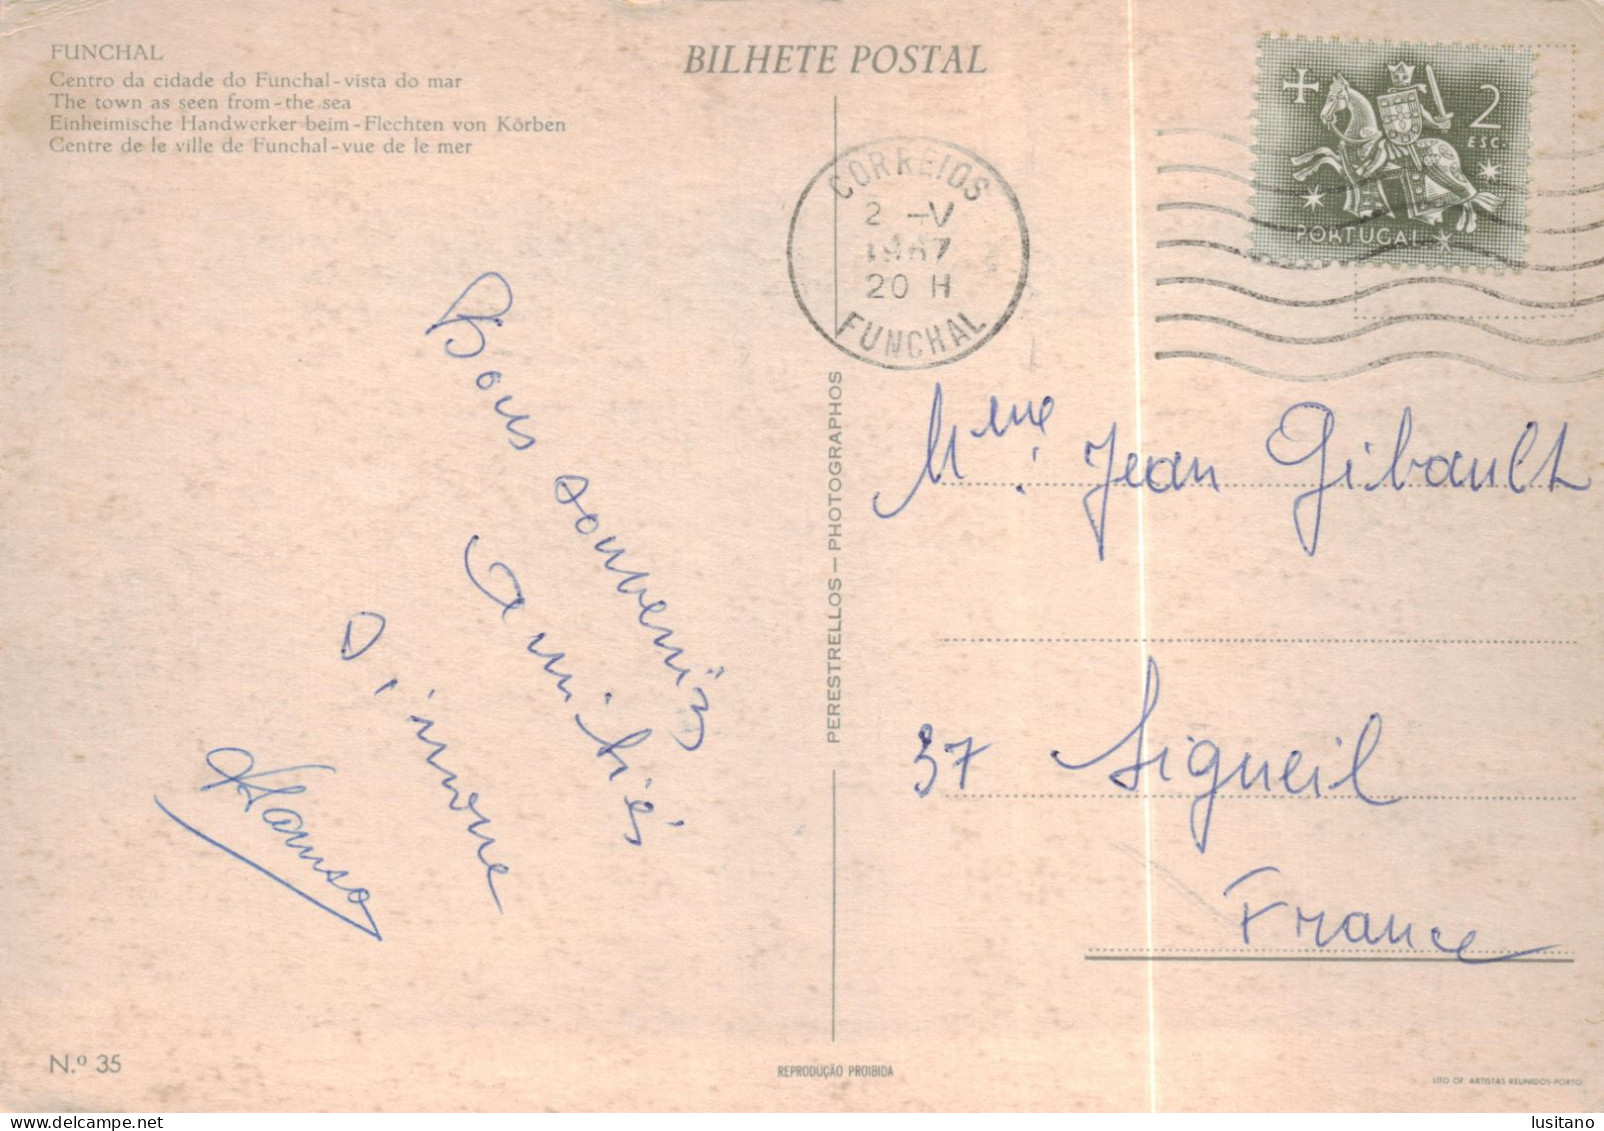 Madeira, Funchal, Centro Da Cidade, Perestrellos, 1967, Selo, Stamp,  Portugal - Madeira